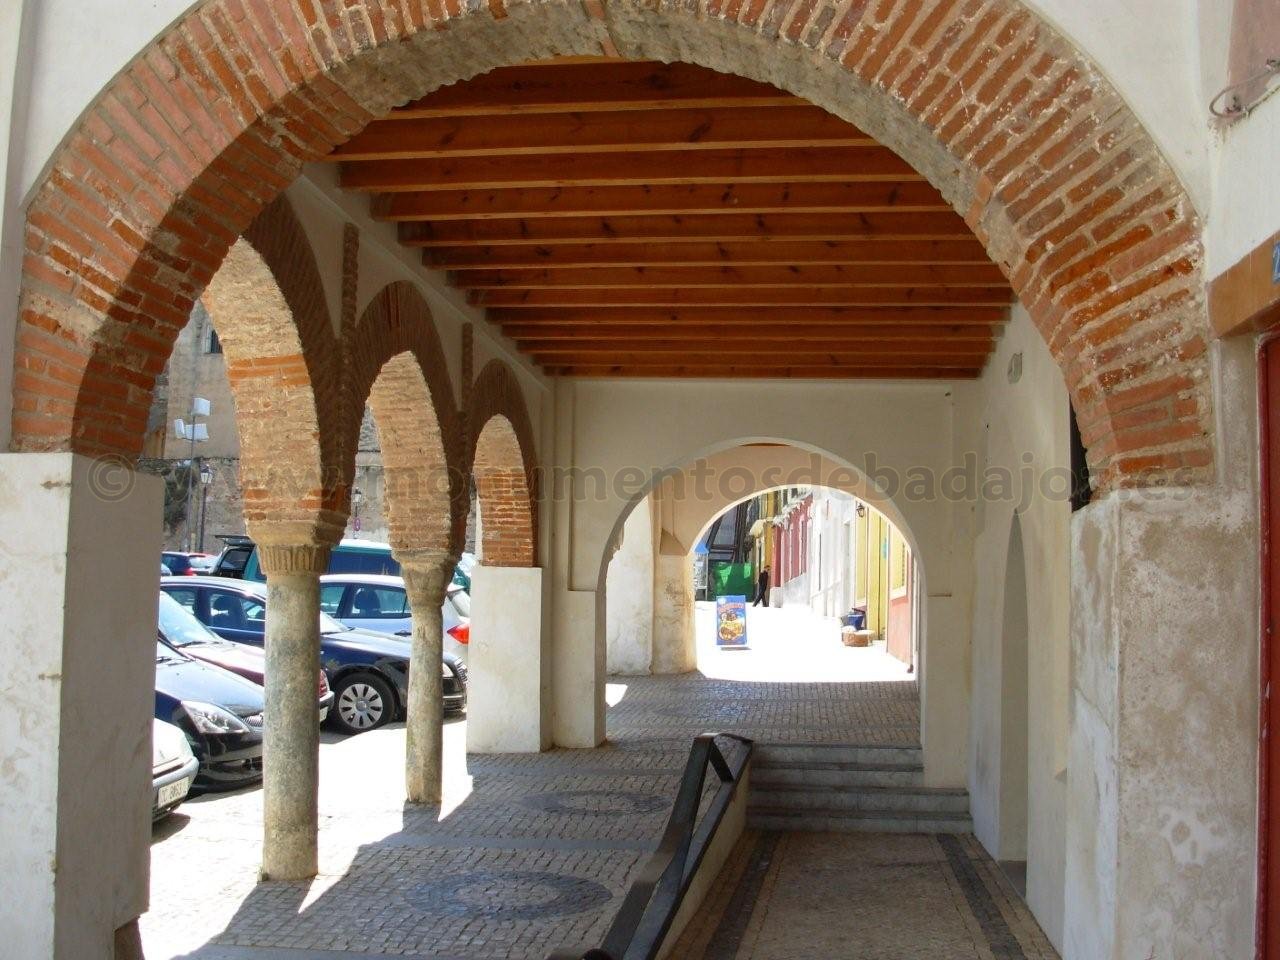 Casas Mudjares, Plaza de San Jos (Badajoz)